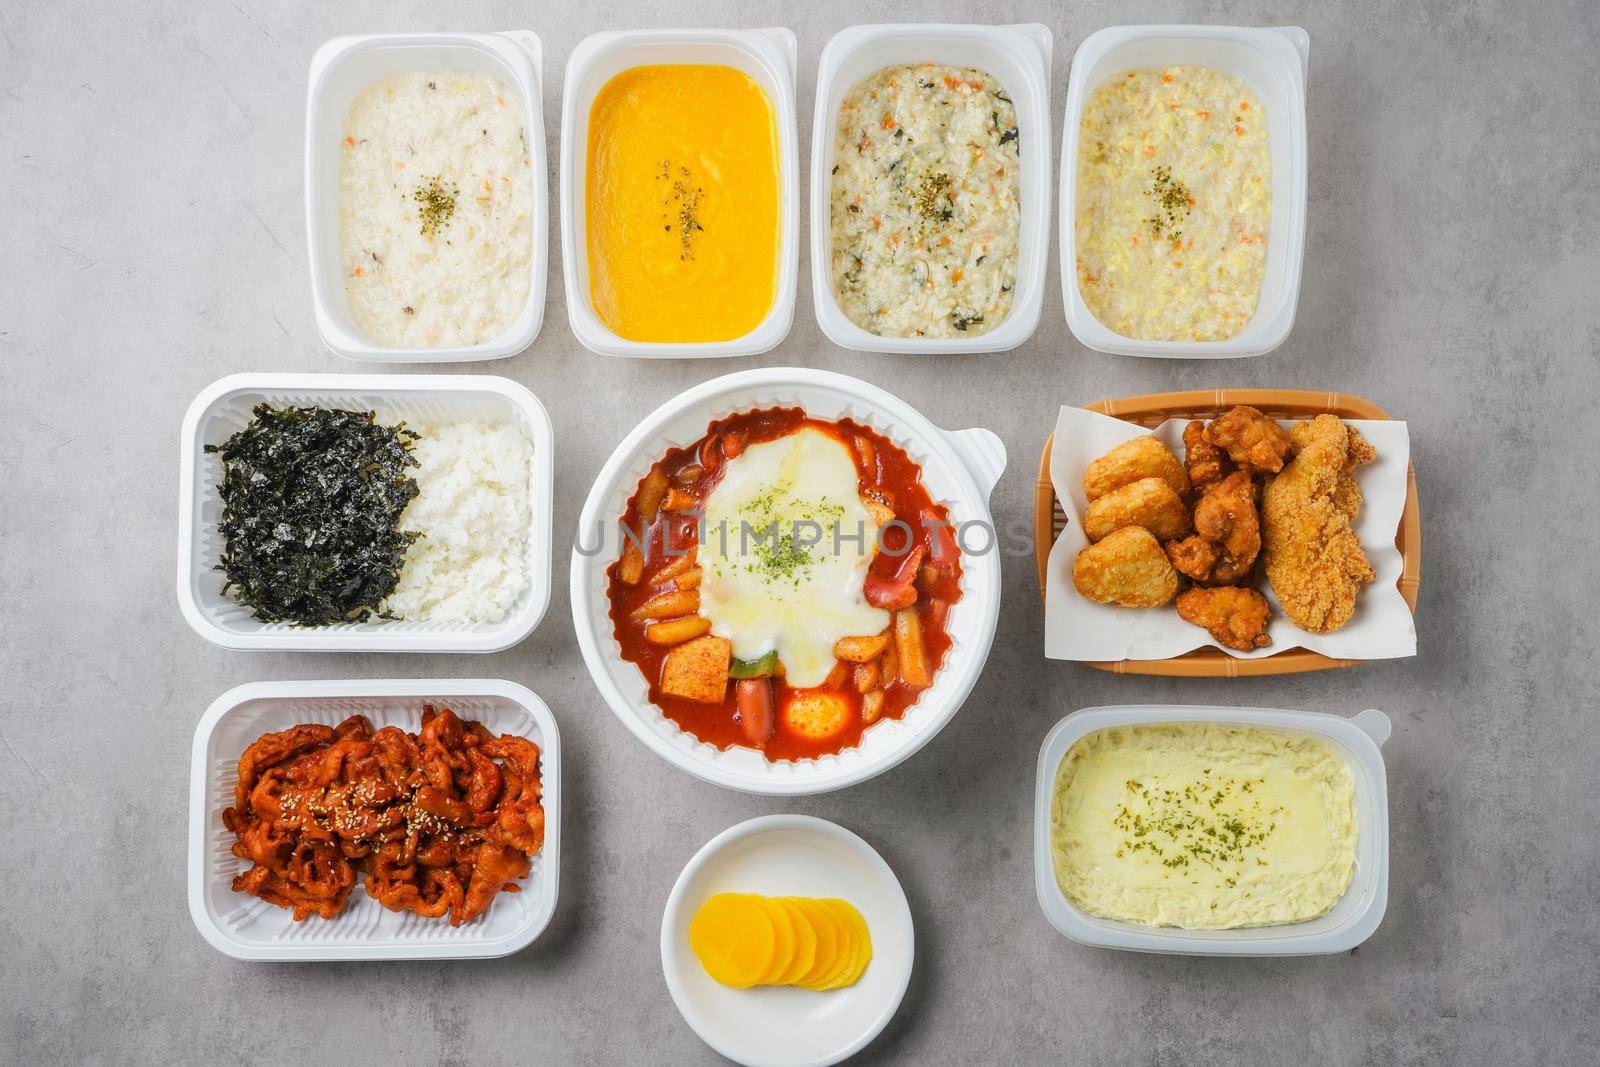 Tteokbokki or korean spicy rice cake by uphotopia